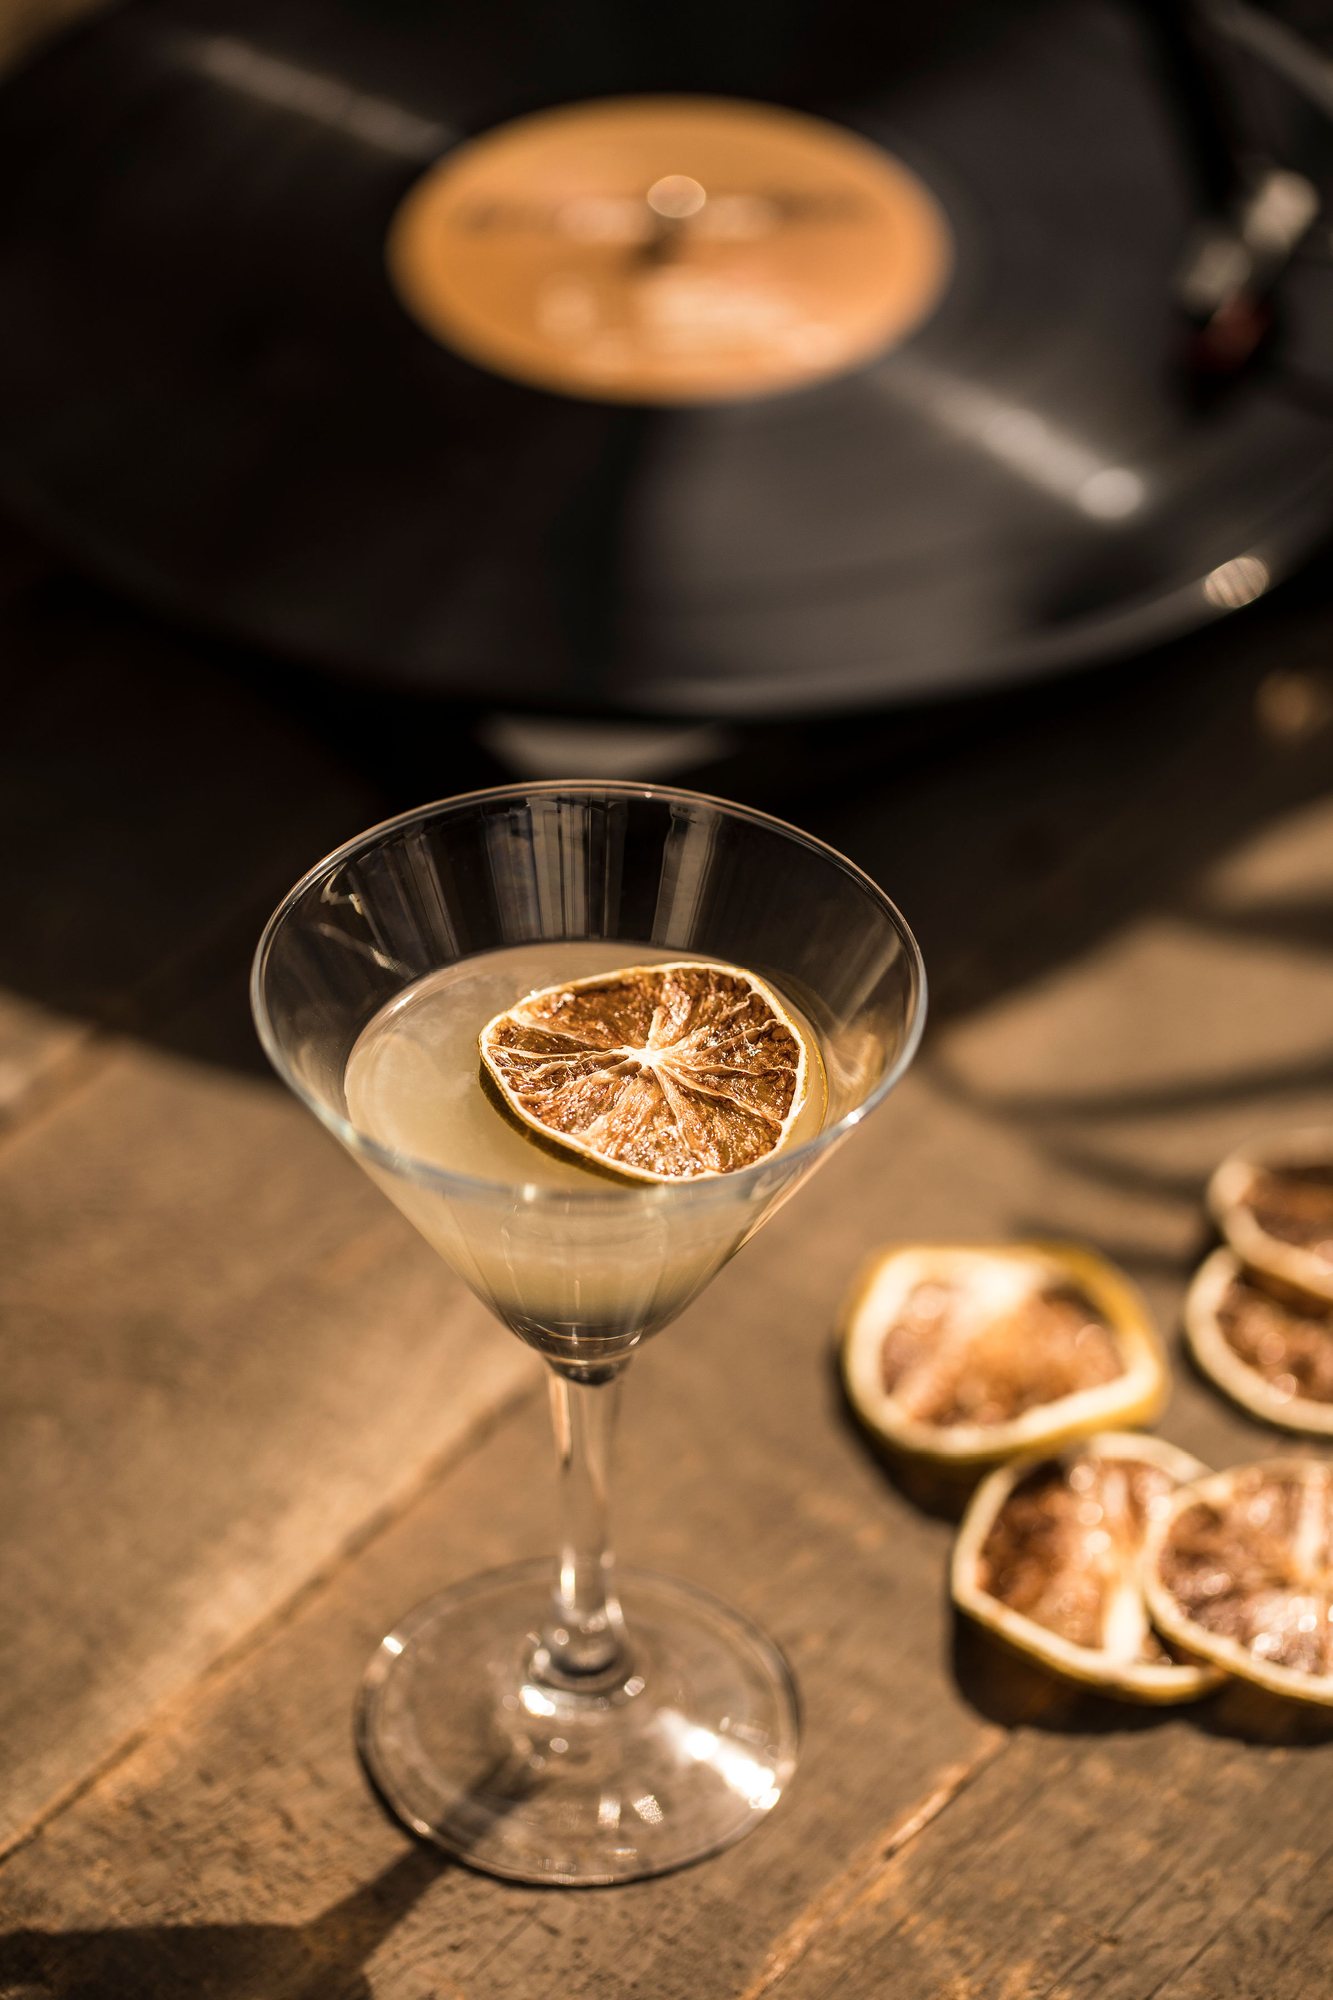 Craft Rum Club includes recipes for delicious cocktails